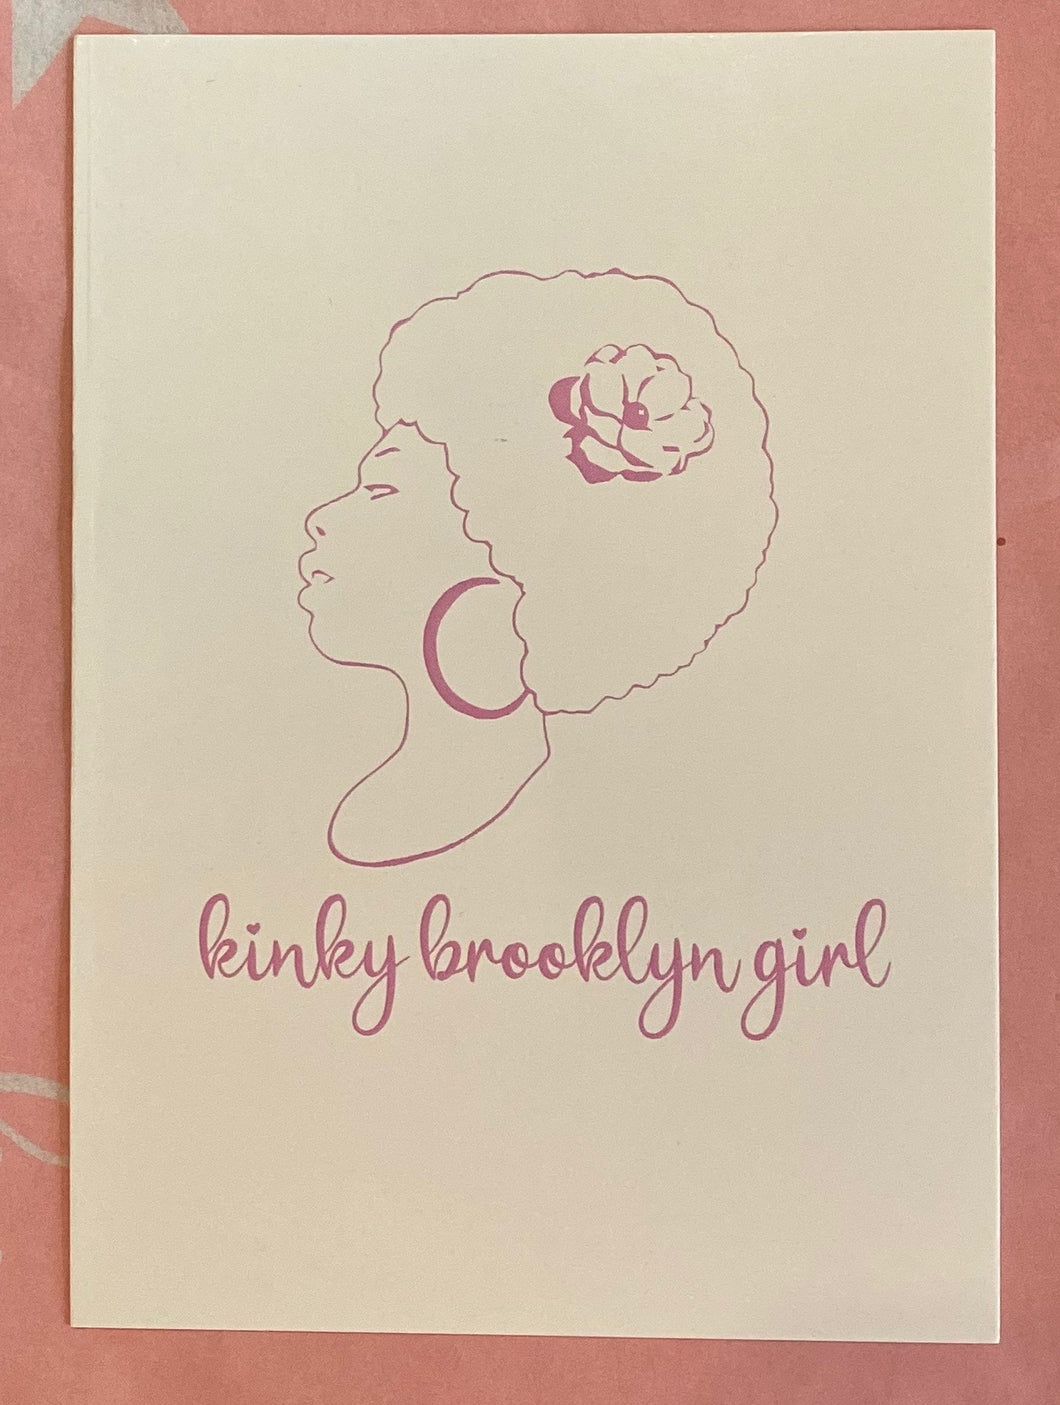 Kinky Brooklyn Girl Gift Card